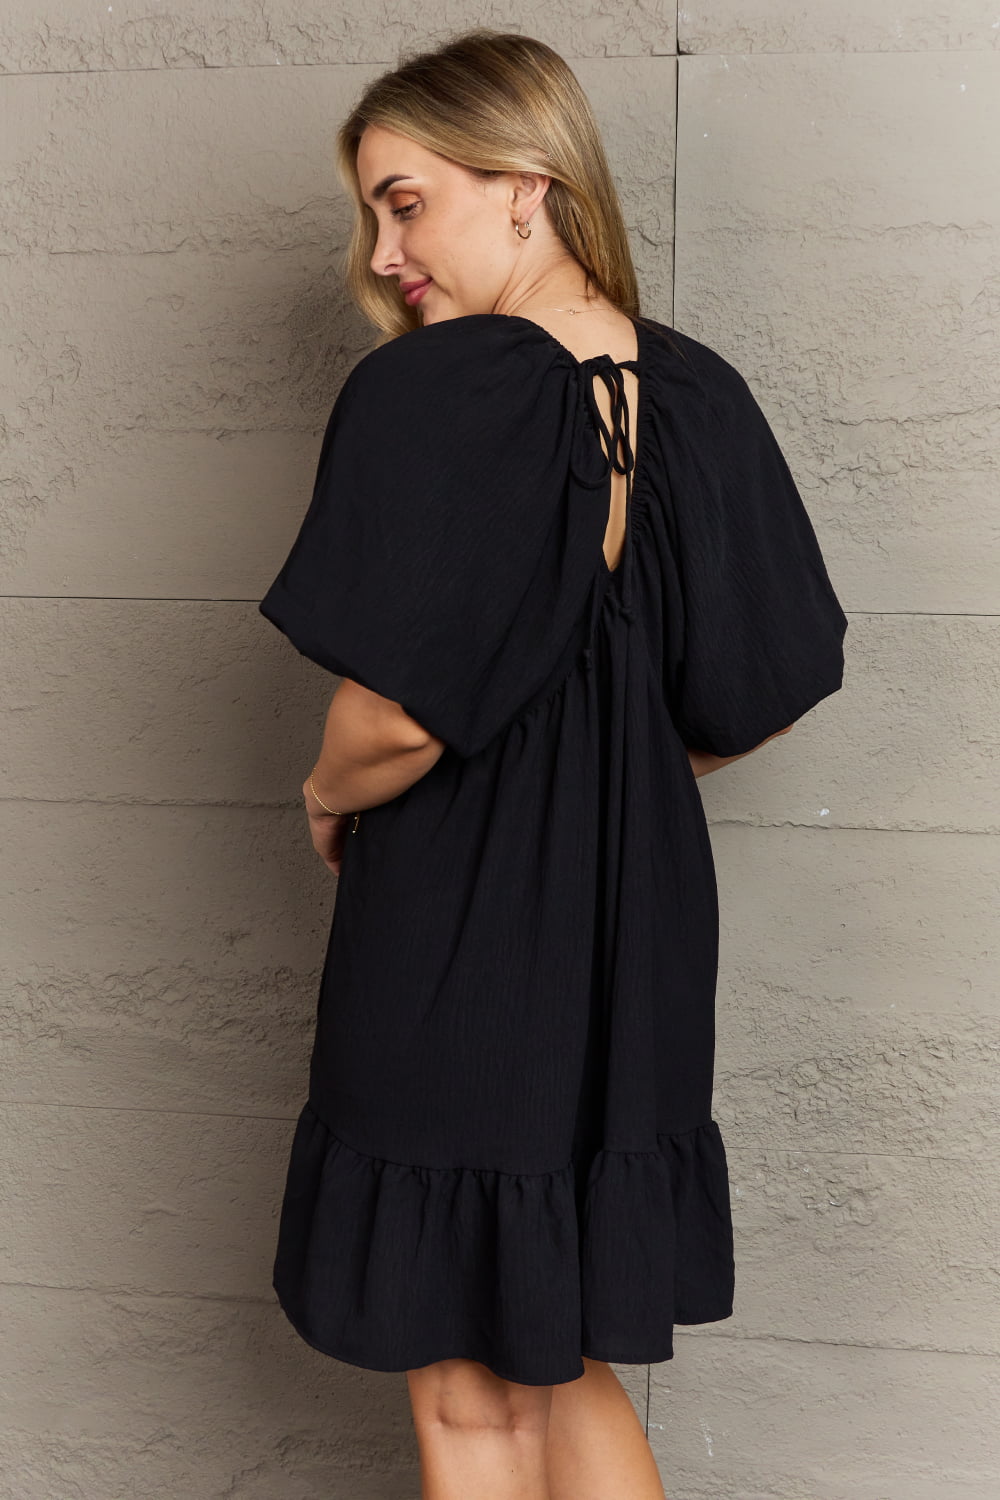 Double V-Neck Puff Sleeve Mini Dress in BlackMini DressHailey & Co